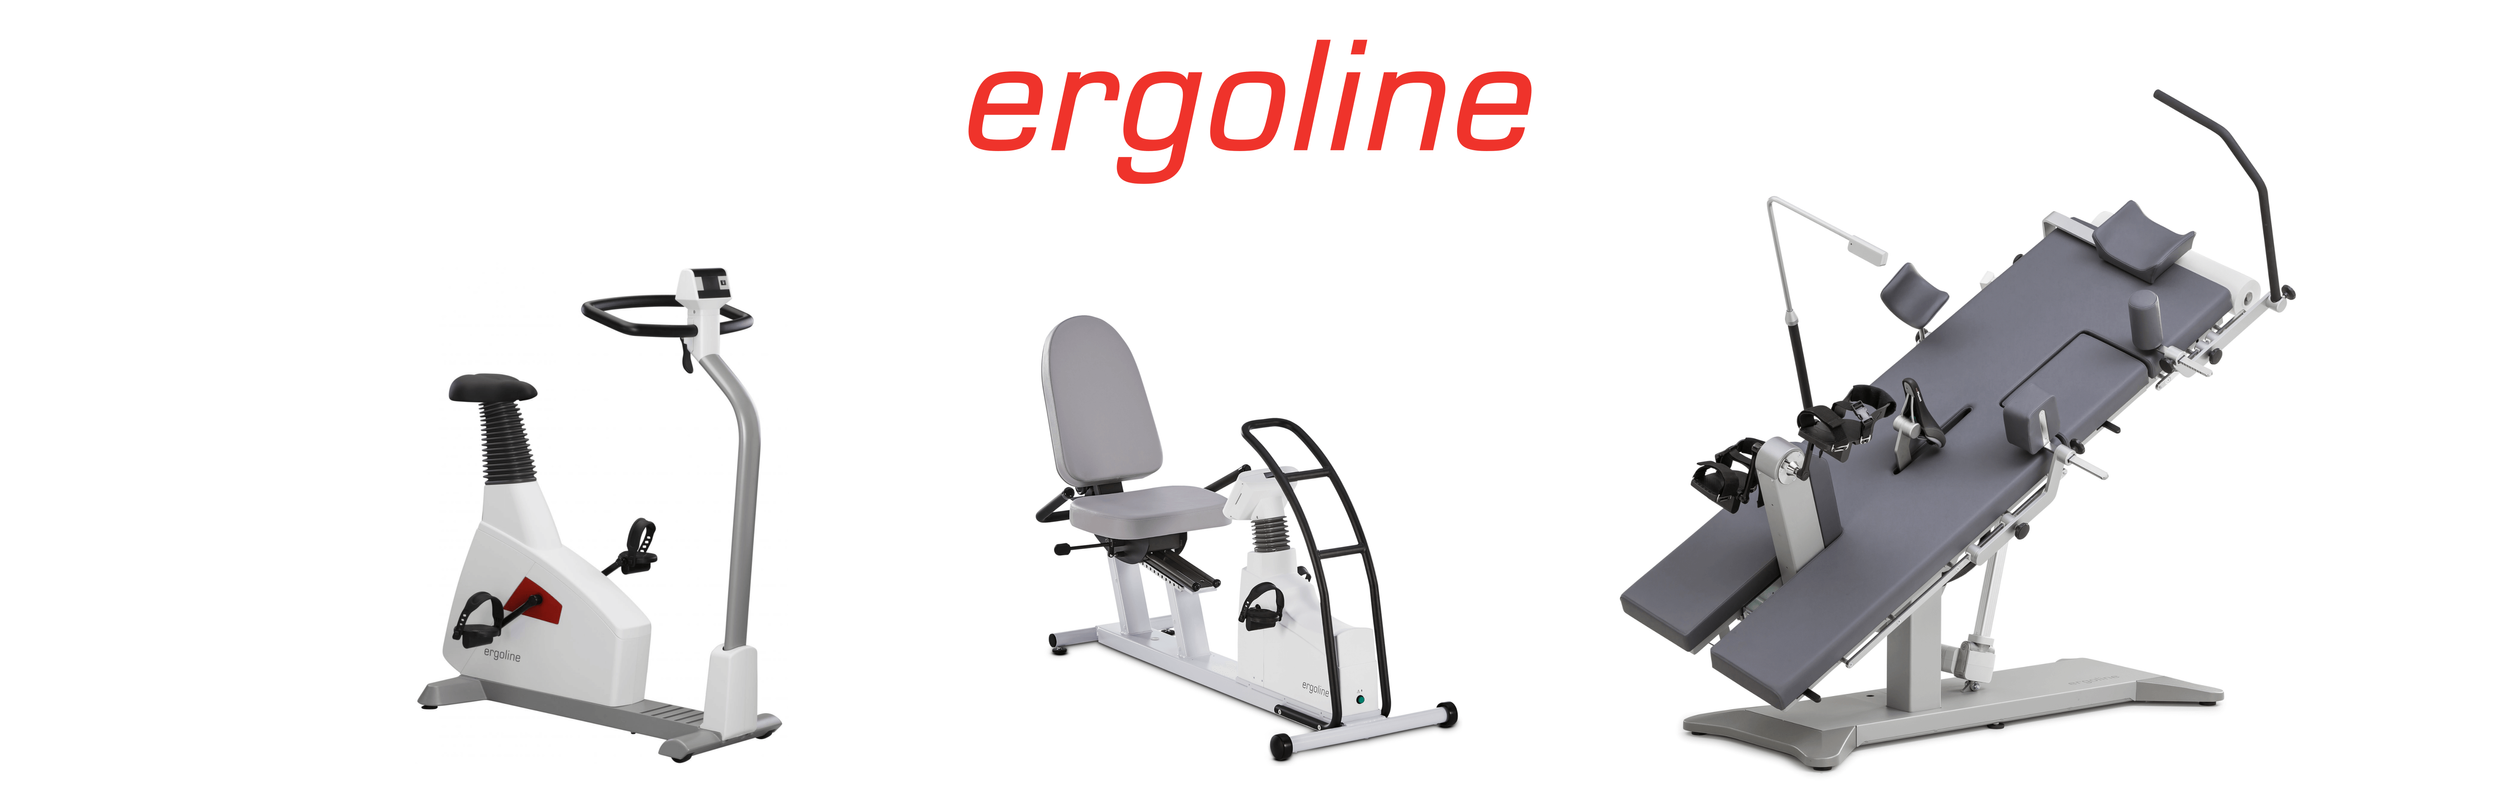 ergolineSlide_new.png